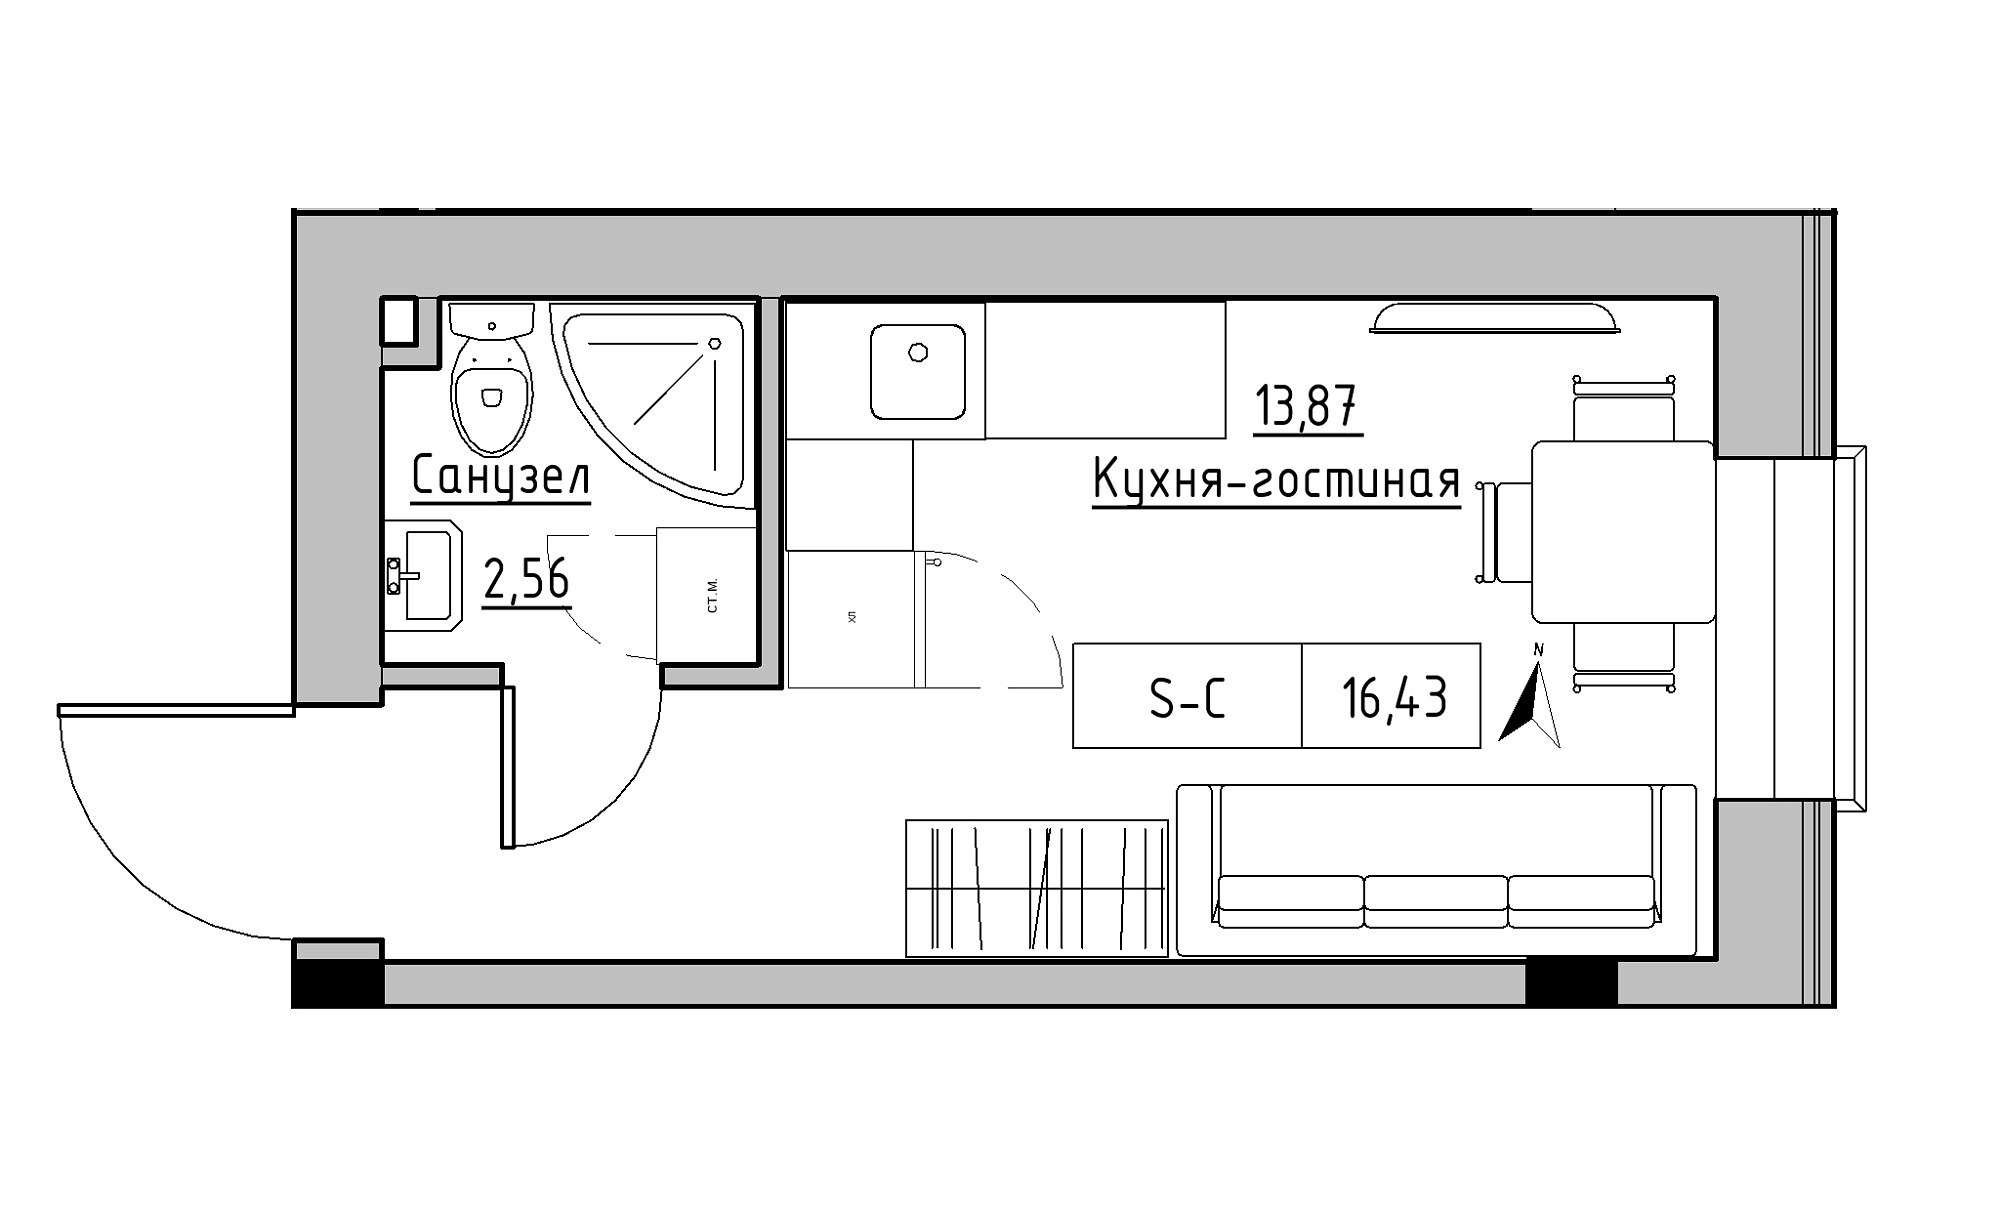 Планировка Smart-квартира площей 16.43м2, KS-023-05/0005.